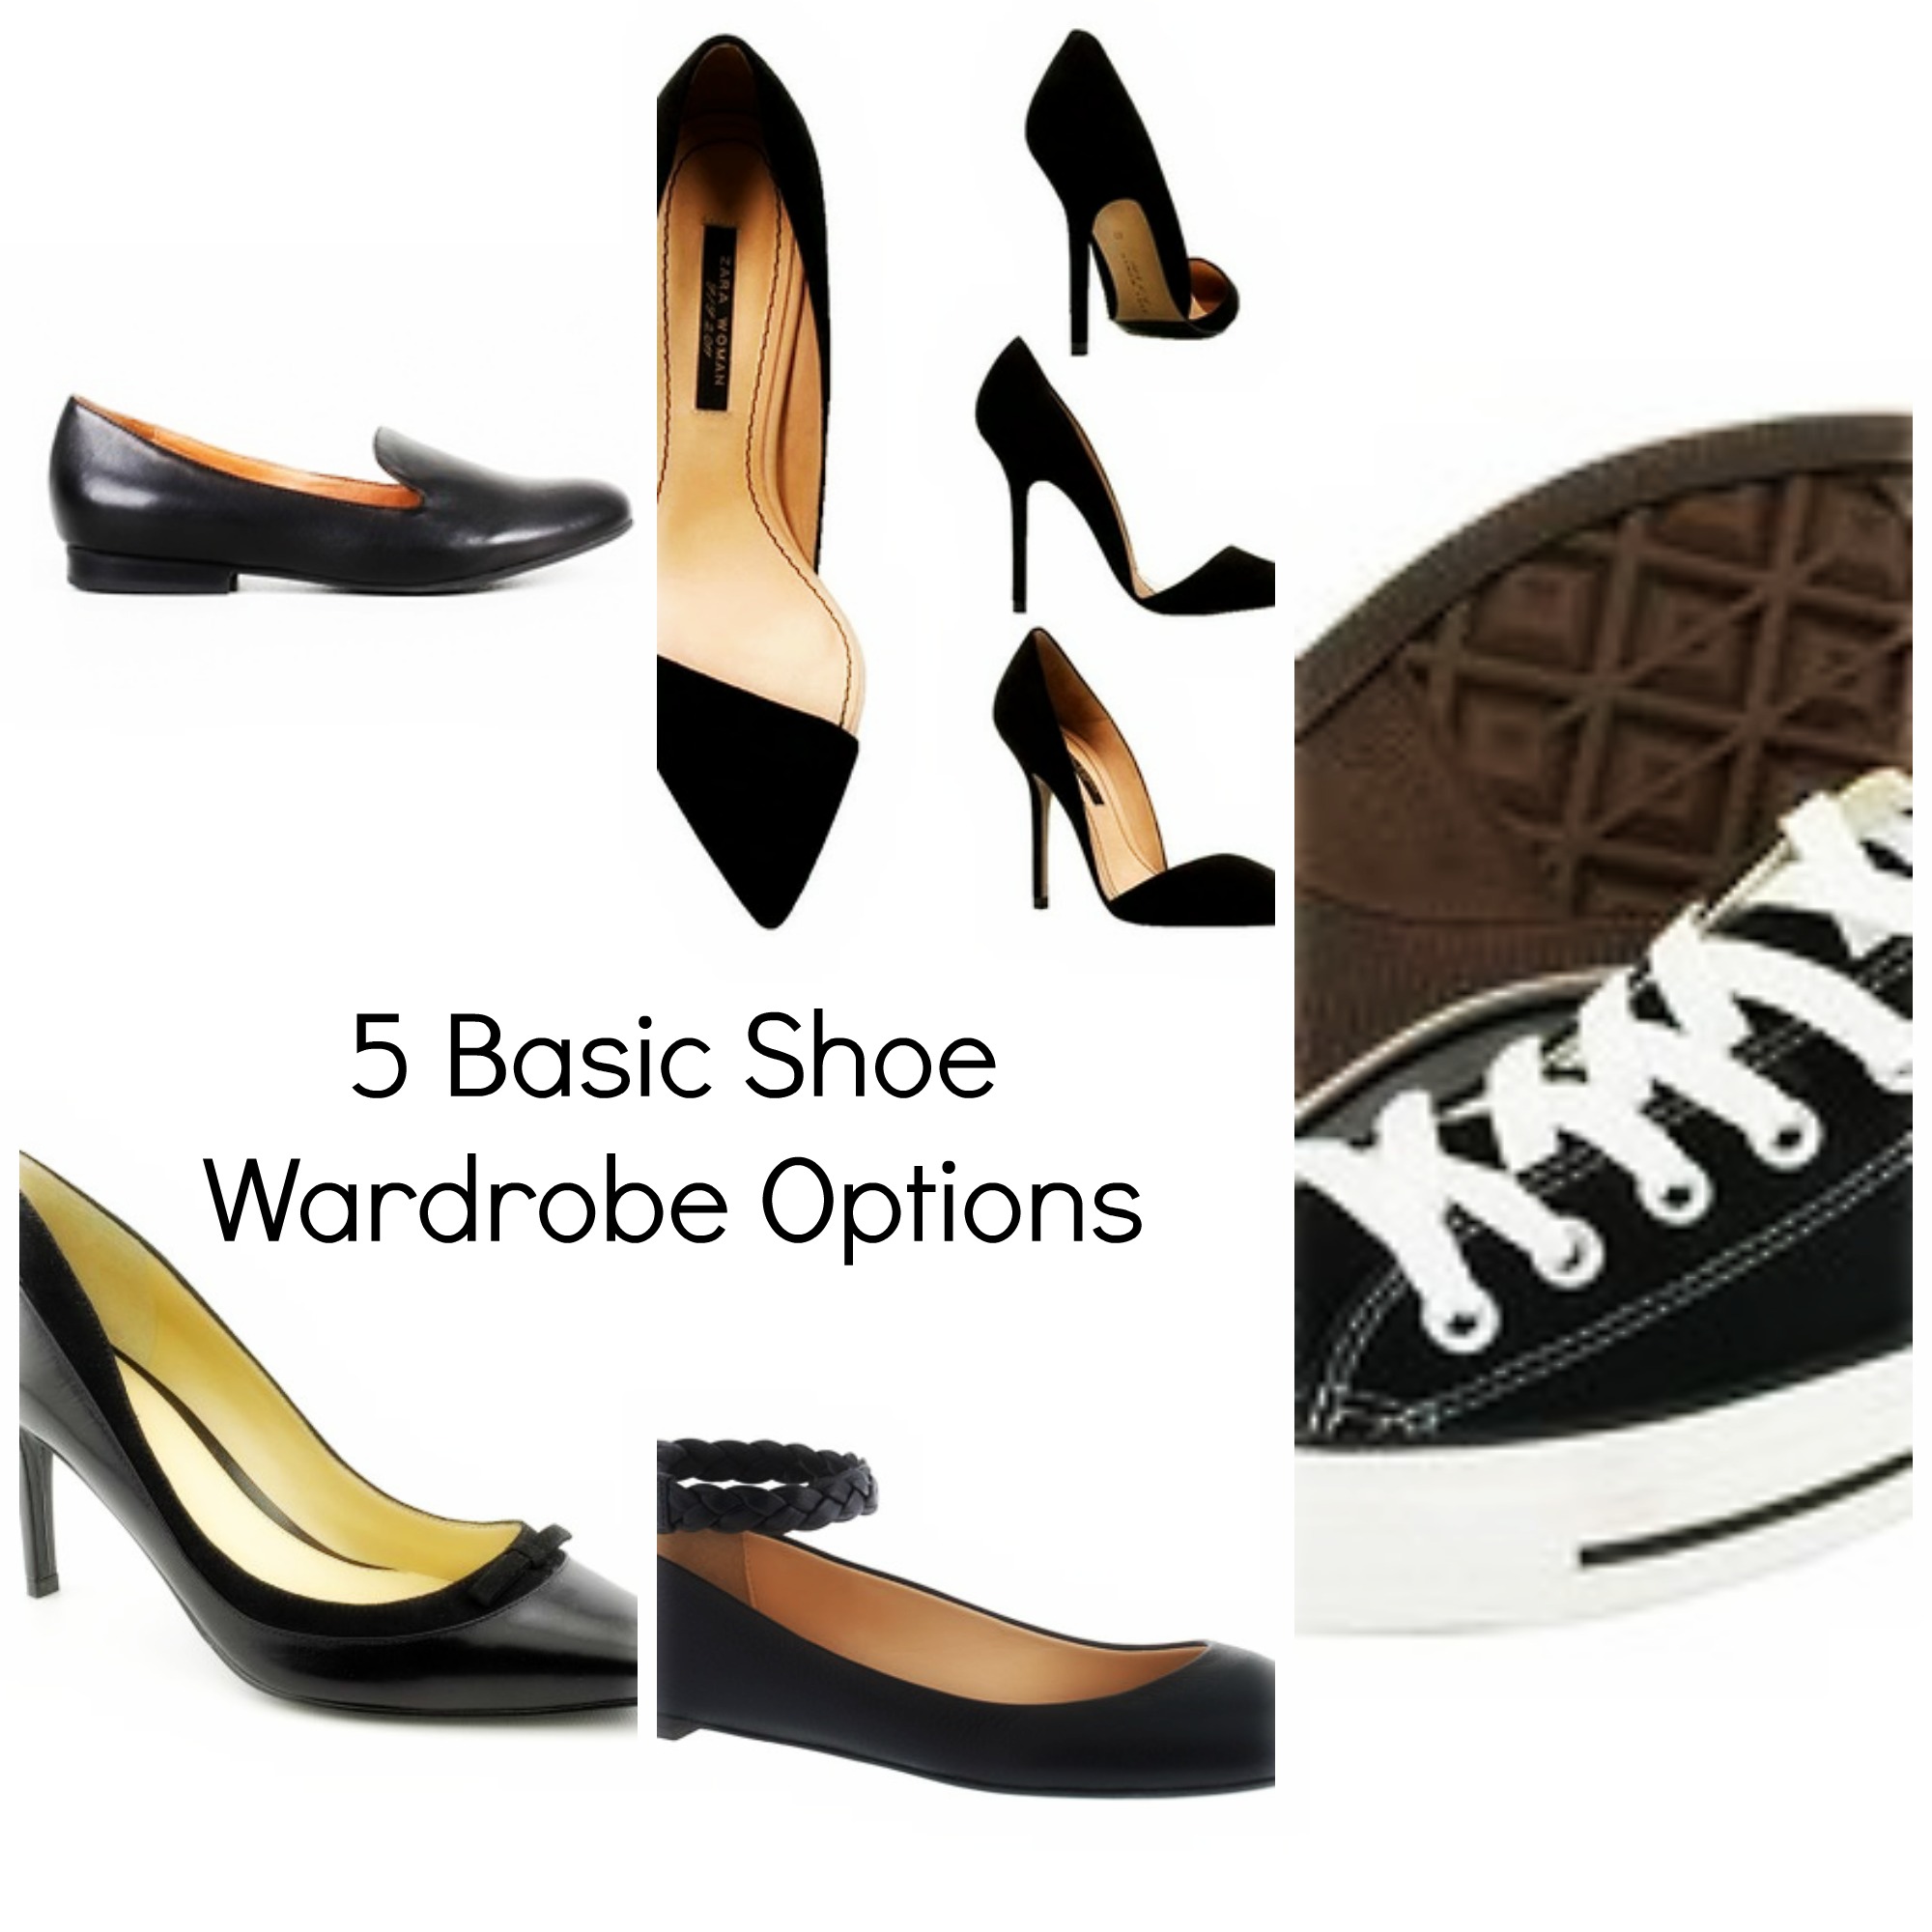 Do You Have a Basic Shoe Wardrobe 